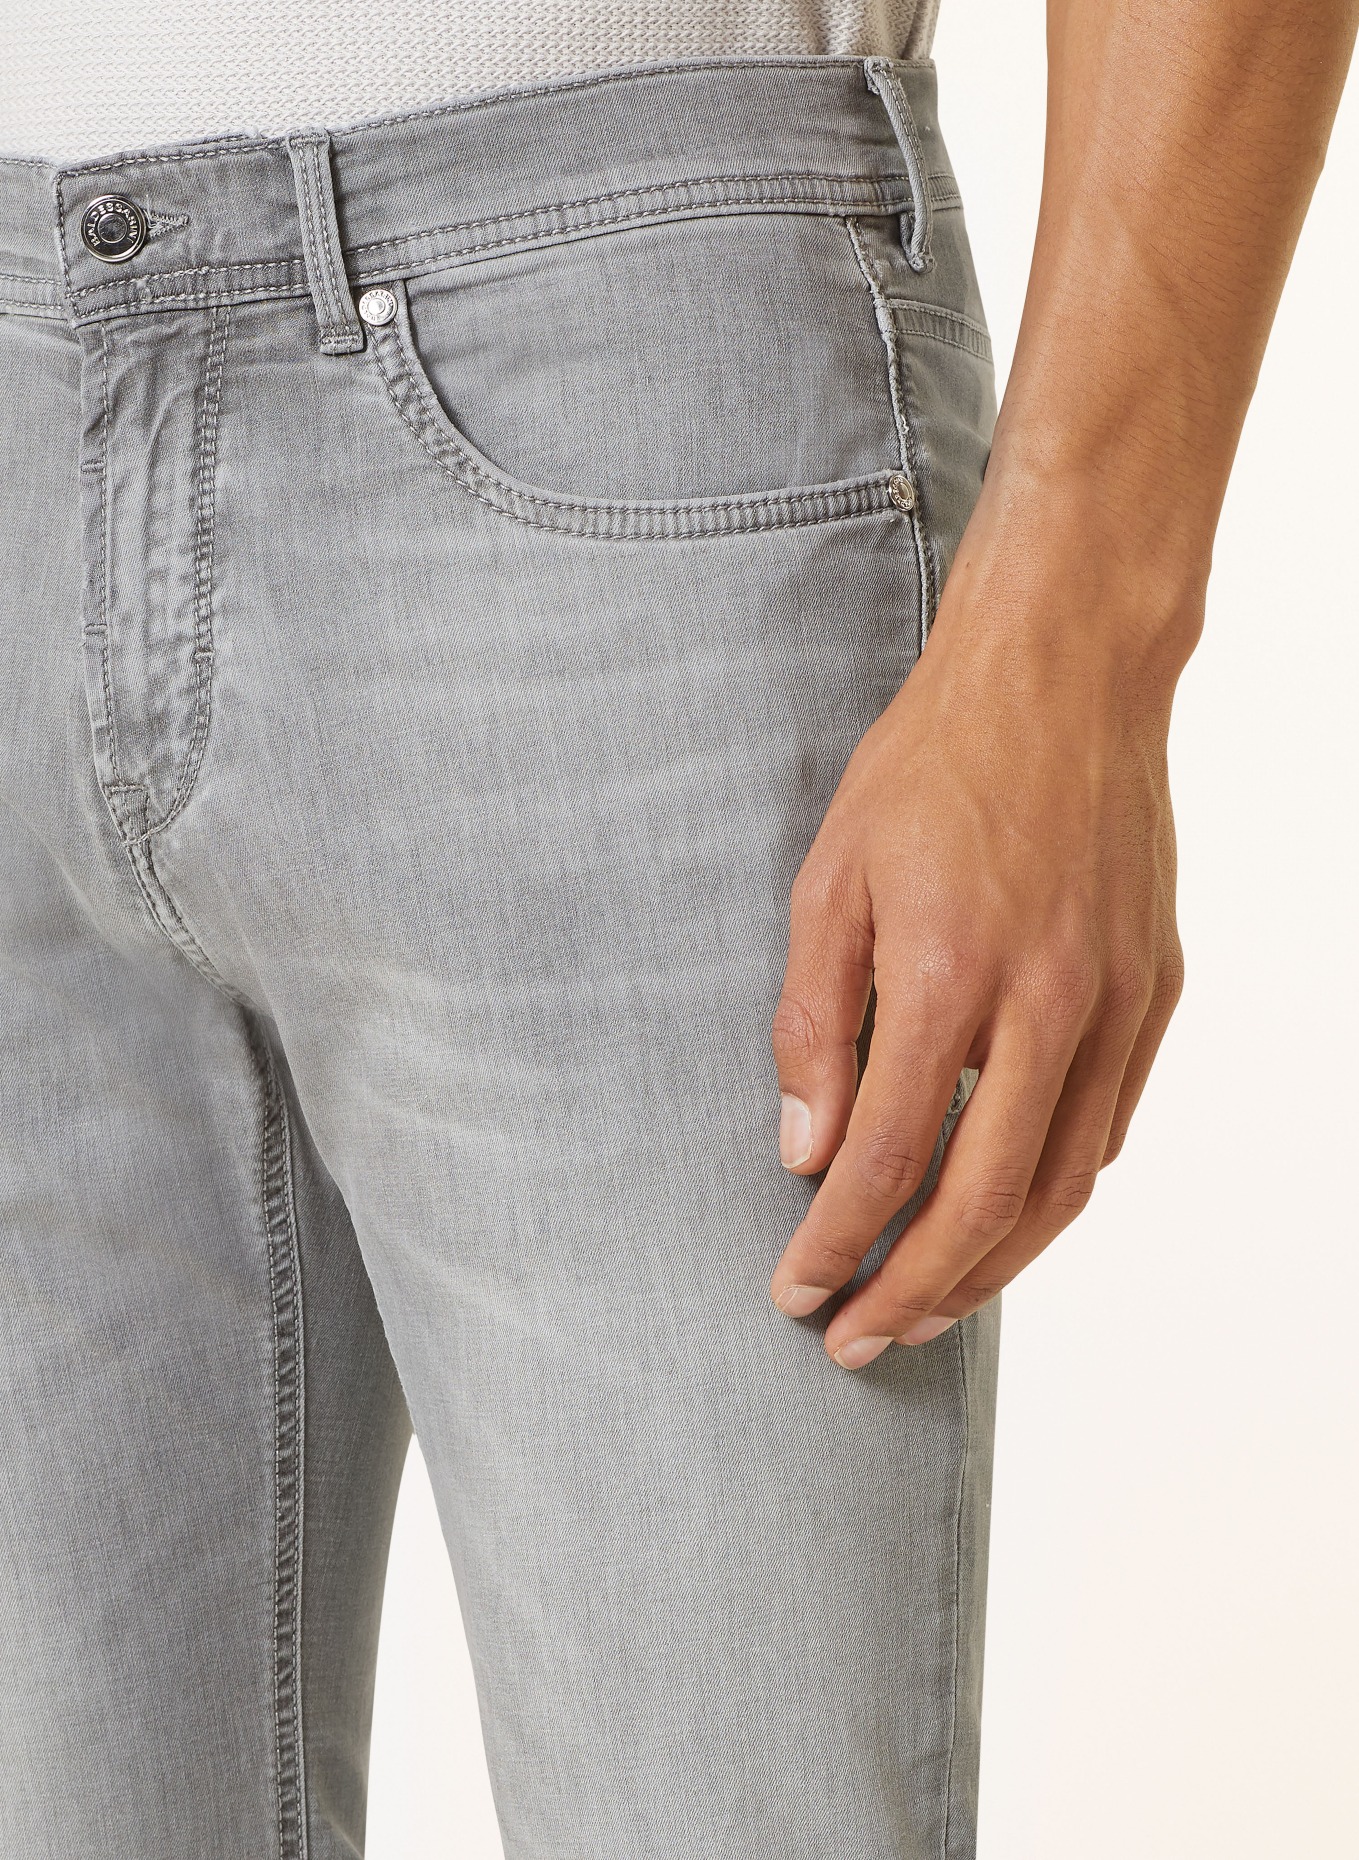 BALDESSARINI Jeans Regular Fit, Farbe: 9854 silver used buffies (Bild 5)